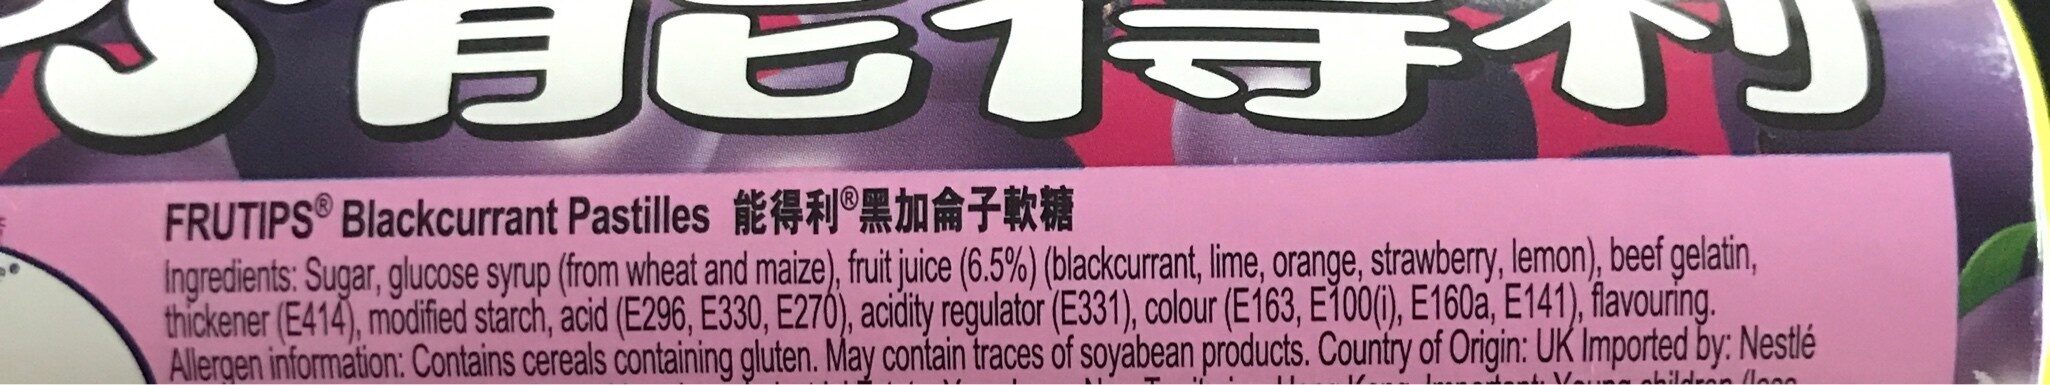 Fruitips blackcurrent pastilles - Ingredienser - en